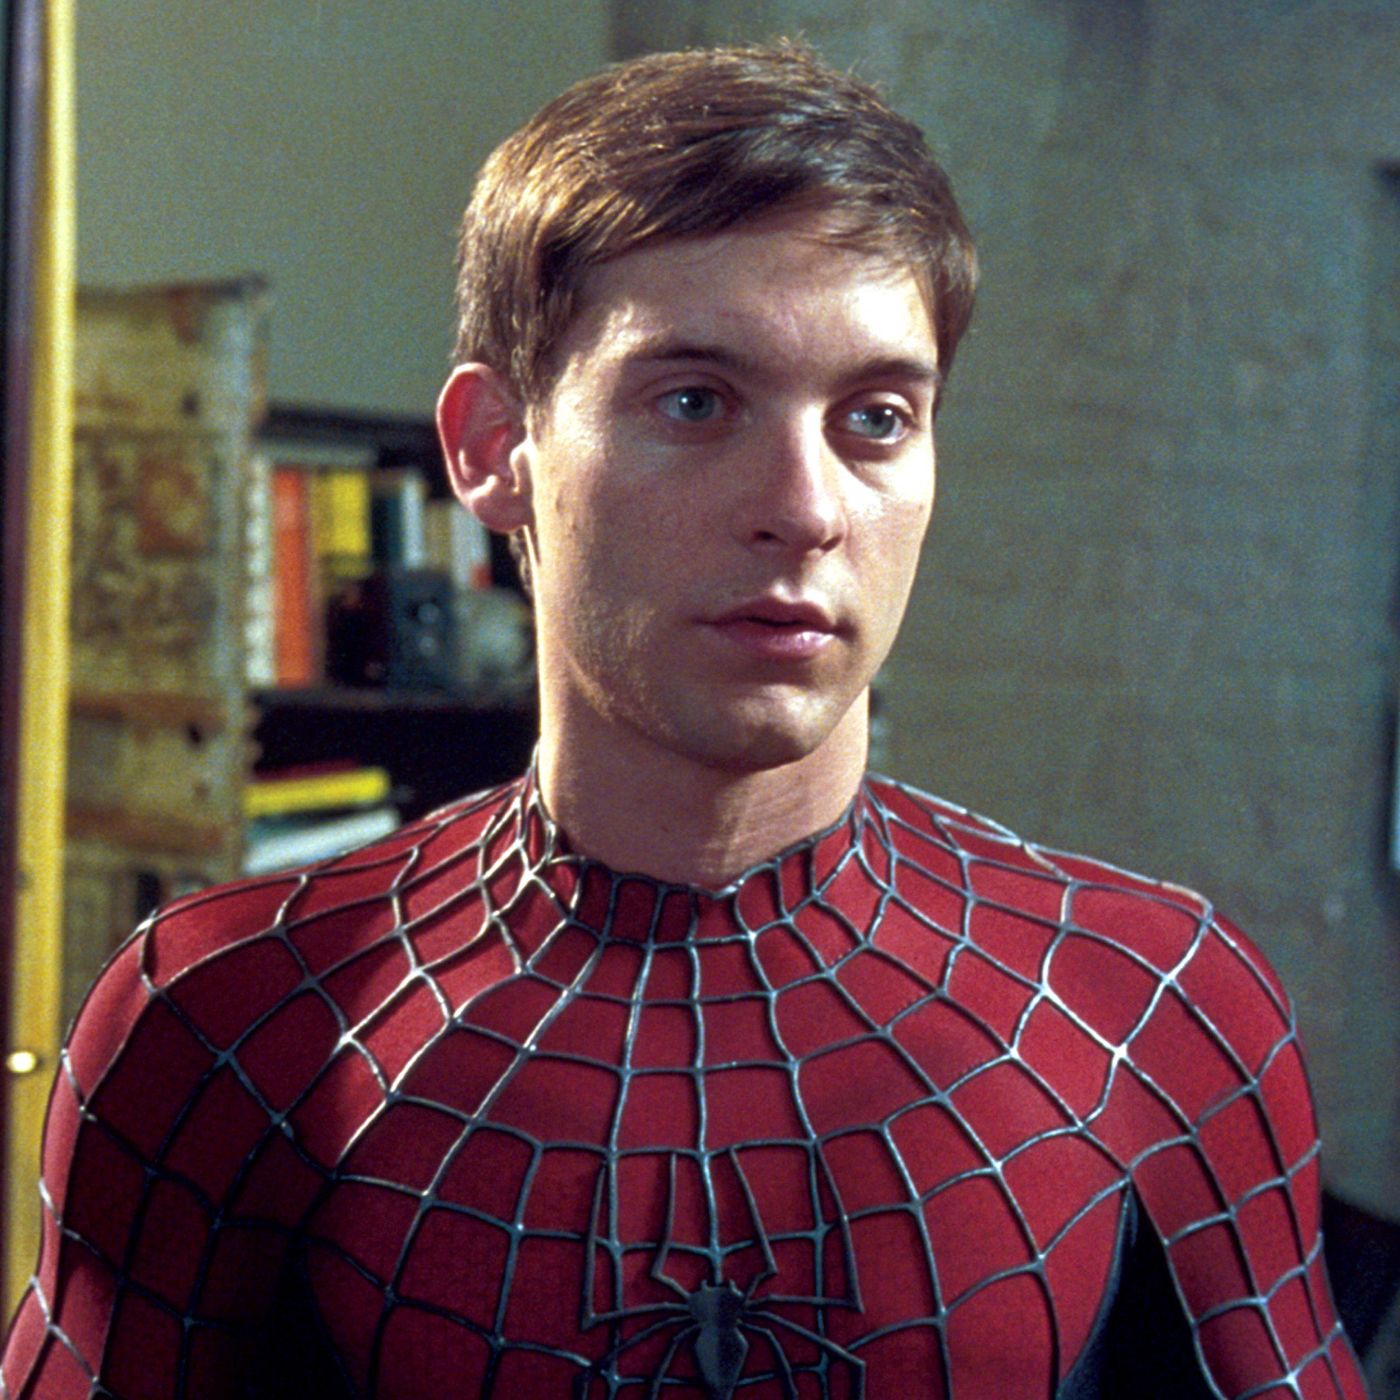 Tobey Maguires Spider-Man Films, Venom Go to Disney Plus